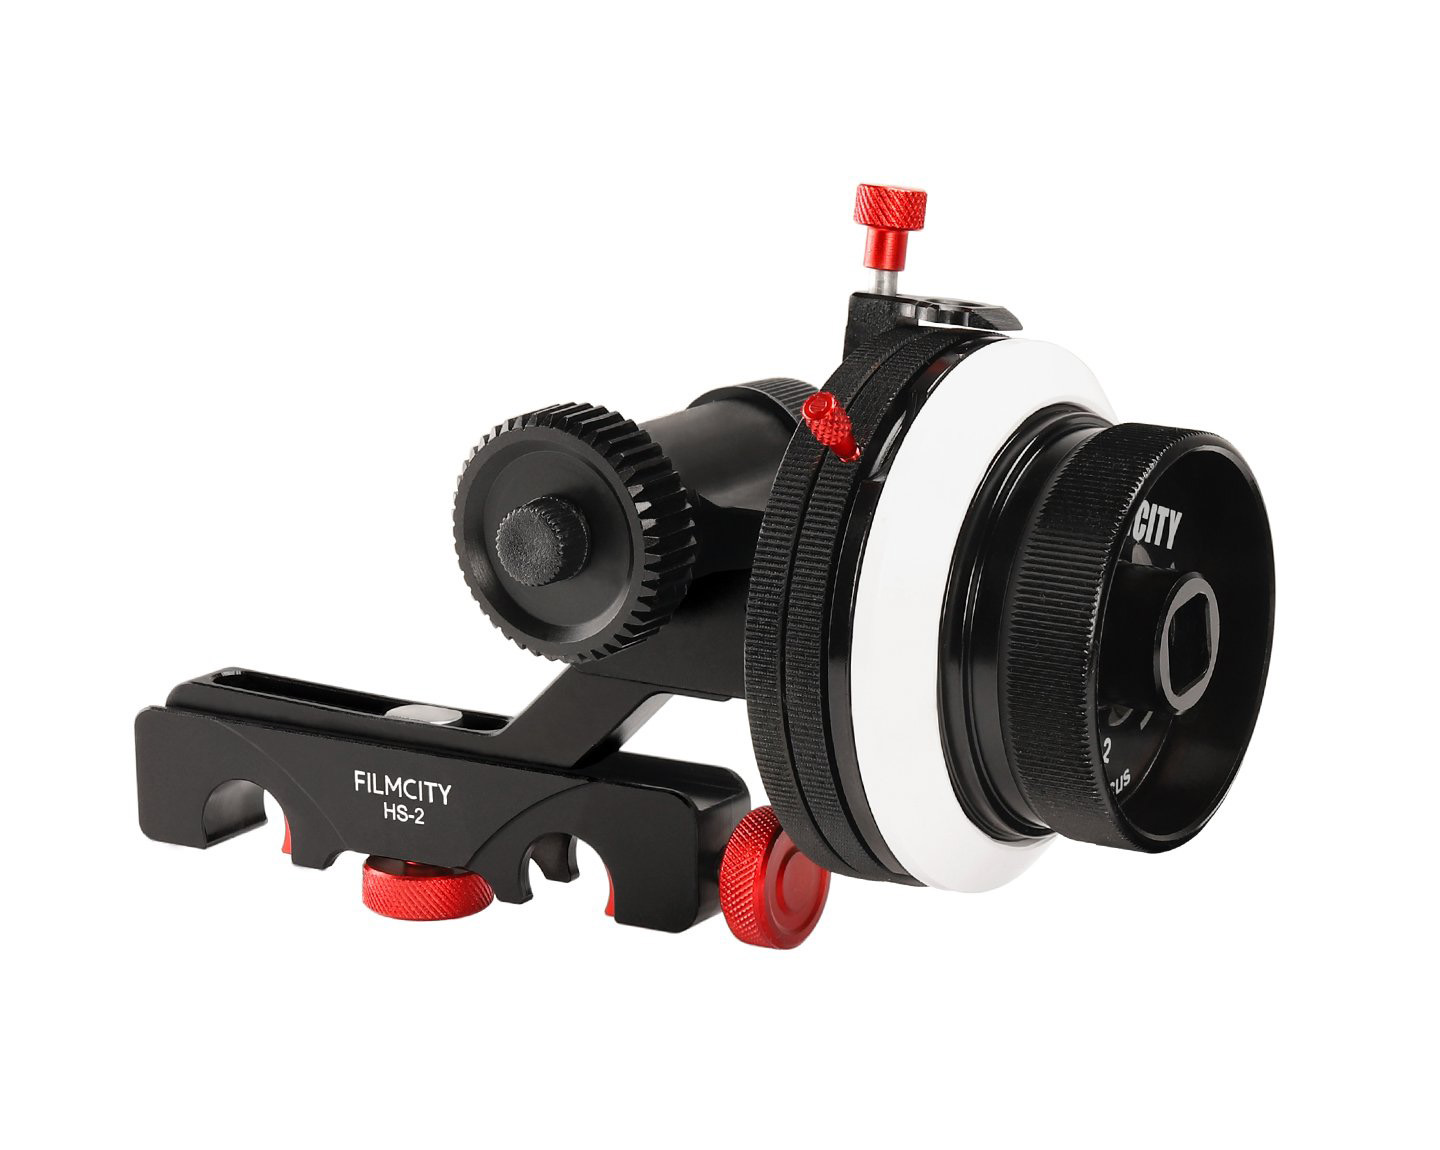 Filmcity HS-2 Follow Focus With Hard Stops ฟอลโล่โฟกัสสำหรับชุดริกกล้องวีดีโอ hard stop มาร์คจุด A/B พร้อมสายรัดเลนส์ ราคา 6700 บาท